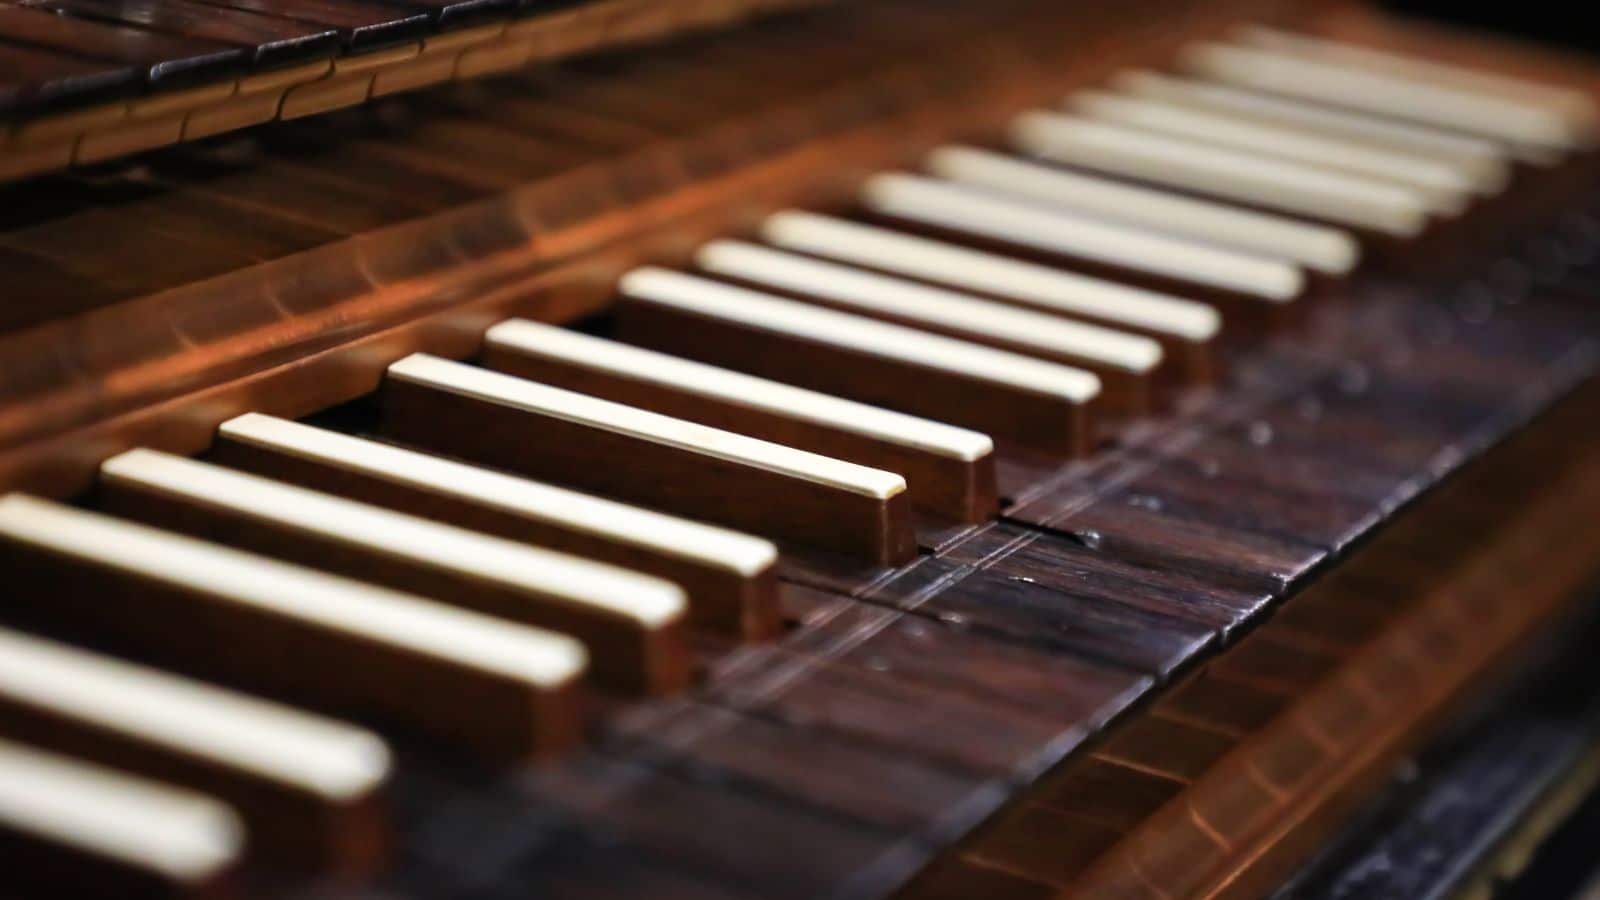 Harpsichord keyboard